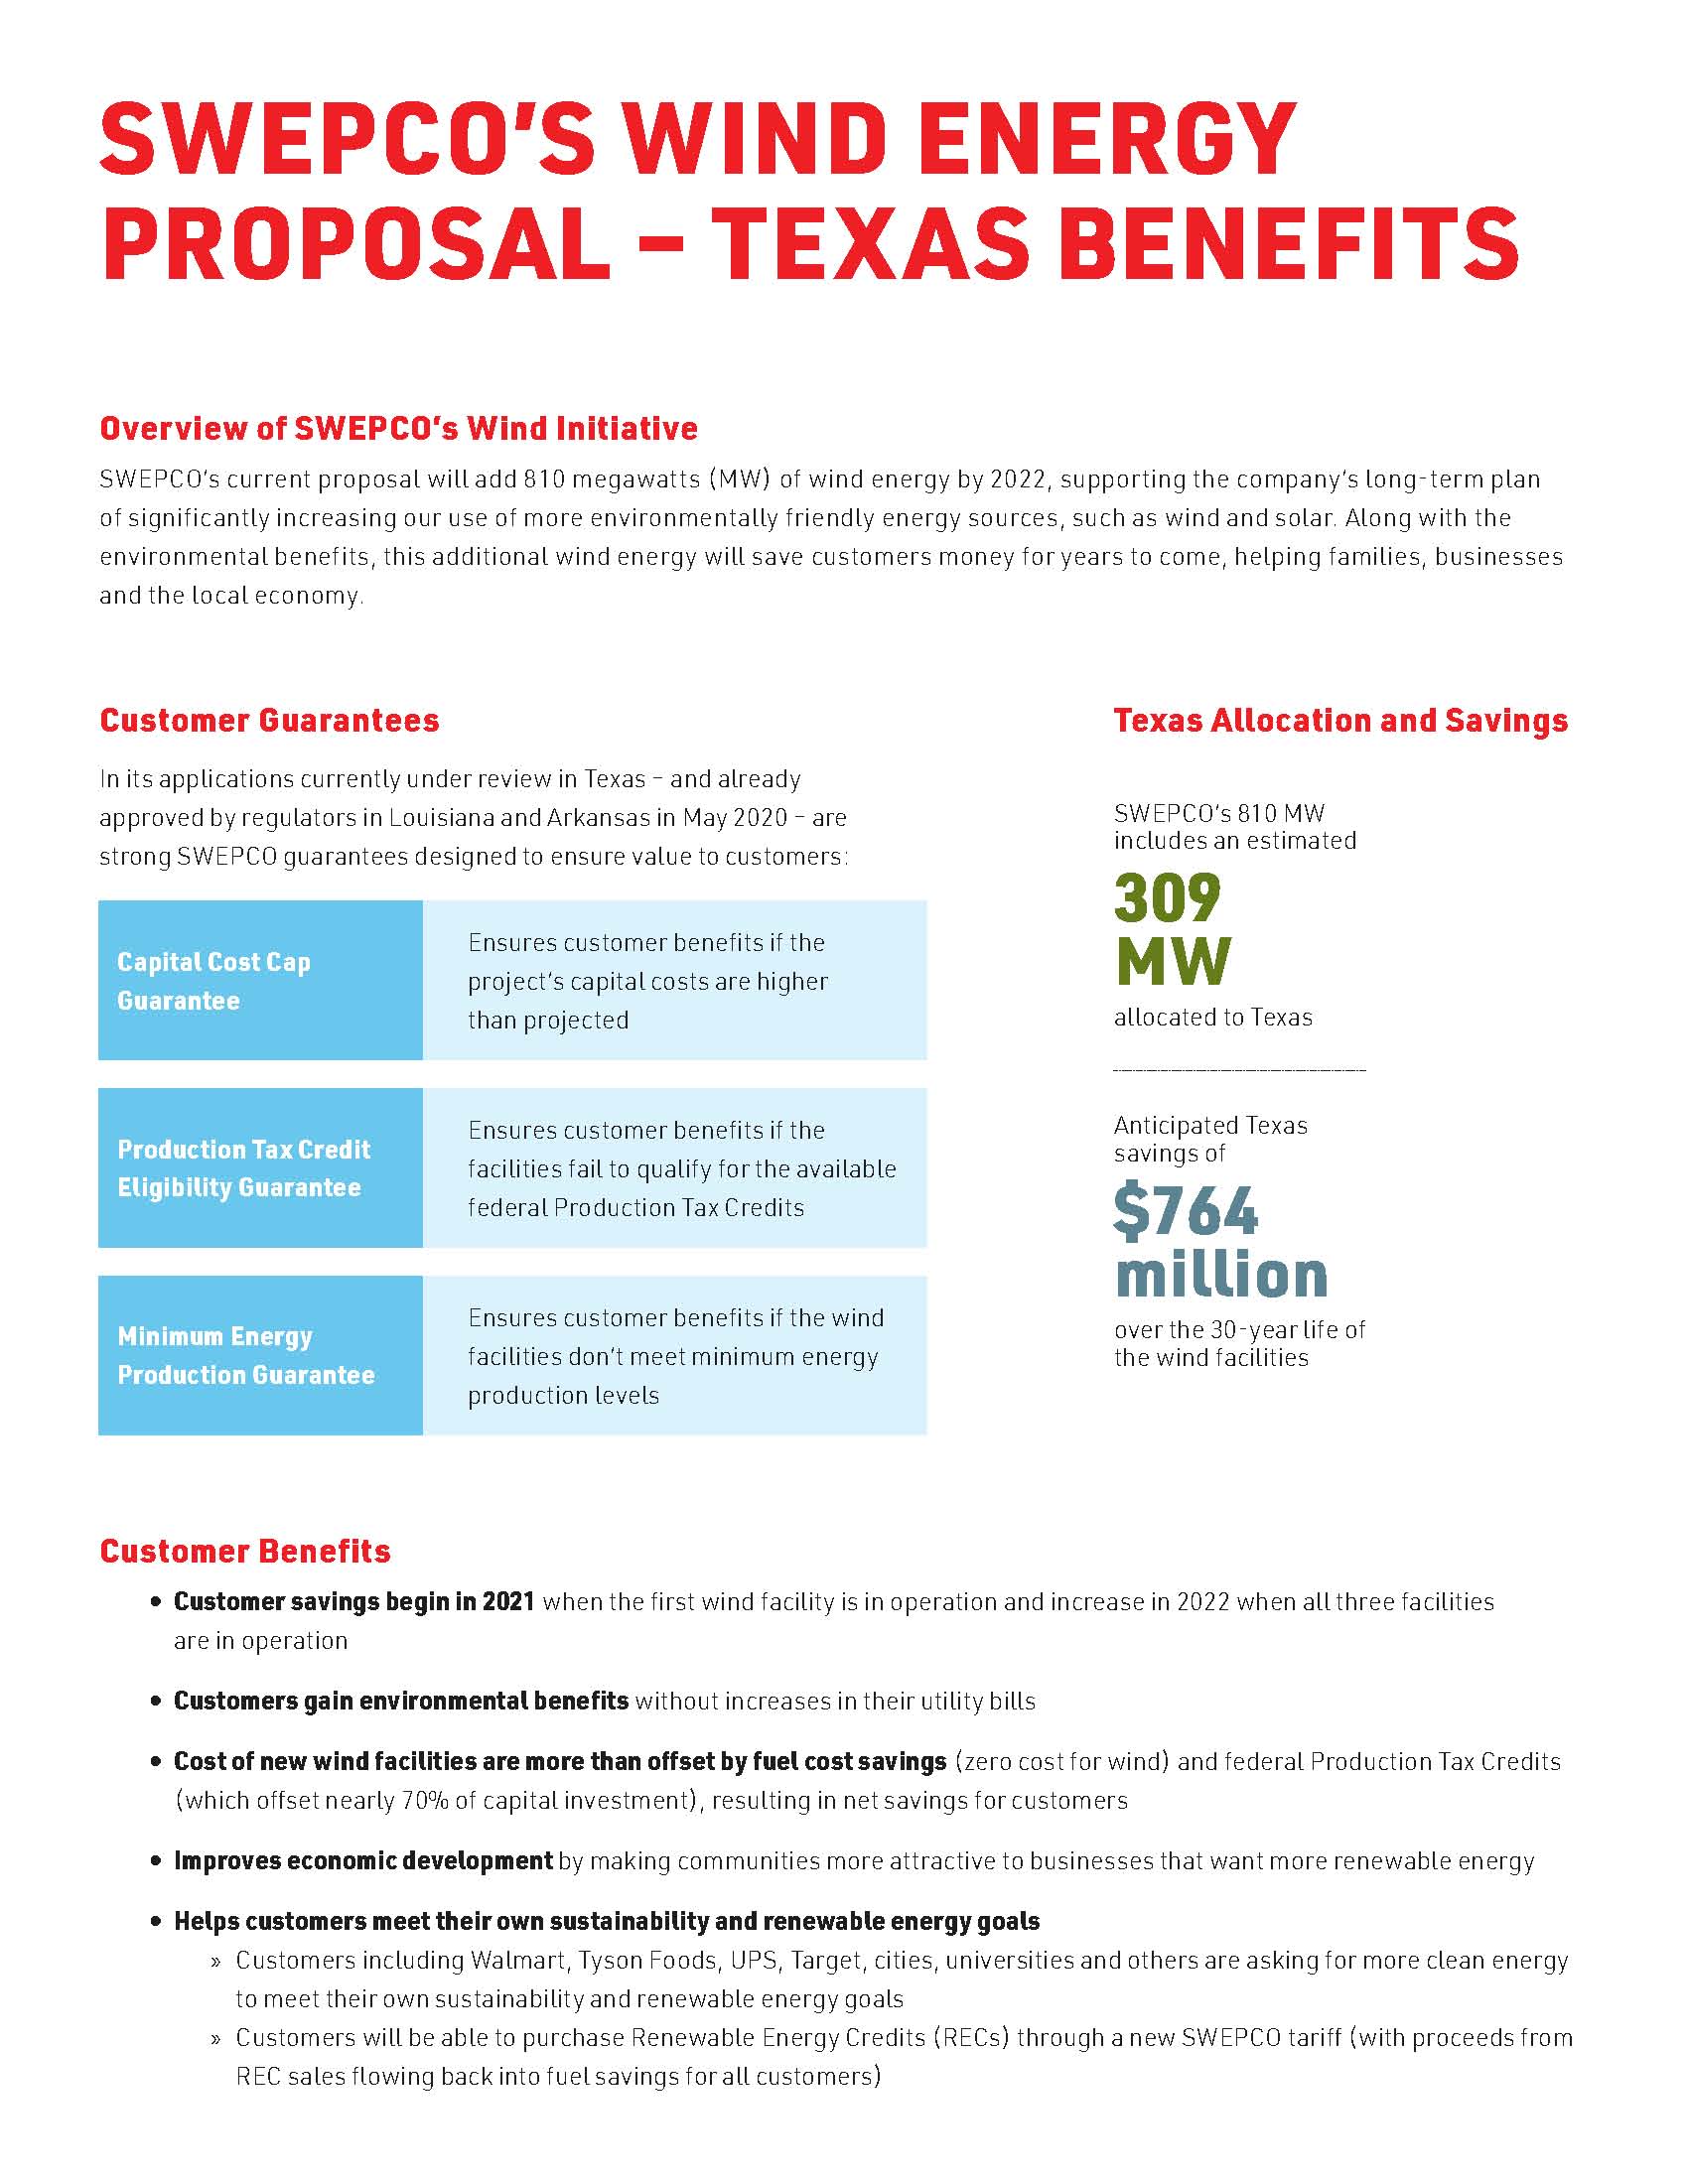 SWEPCO’S Wind Energy Proposal - Texas Benefits